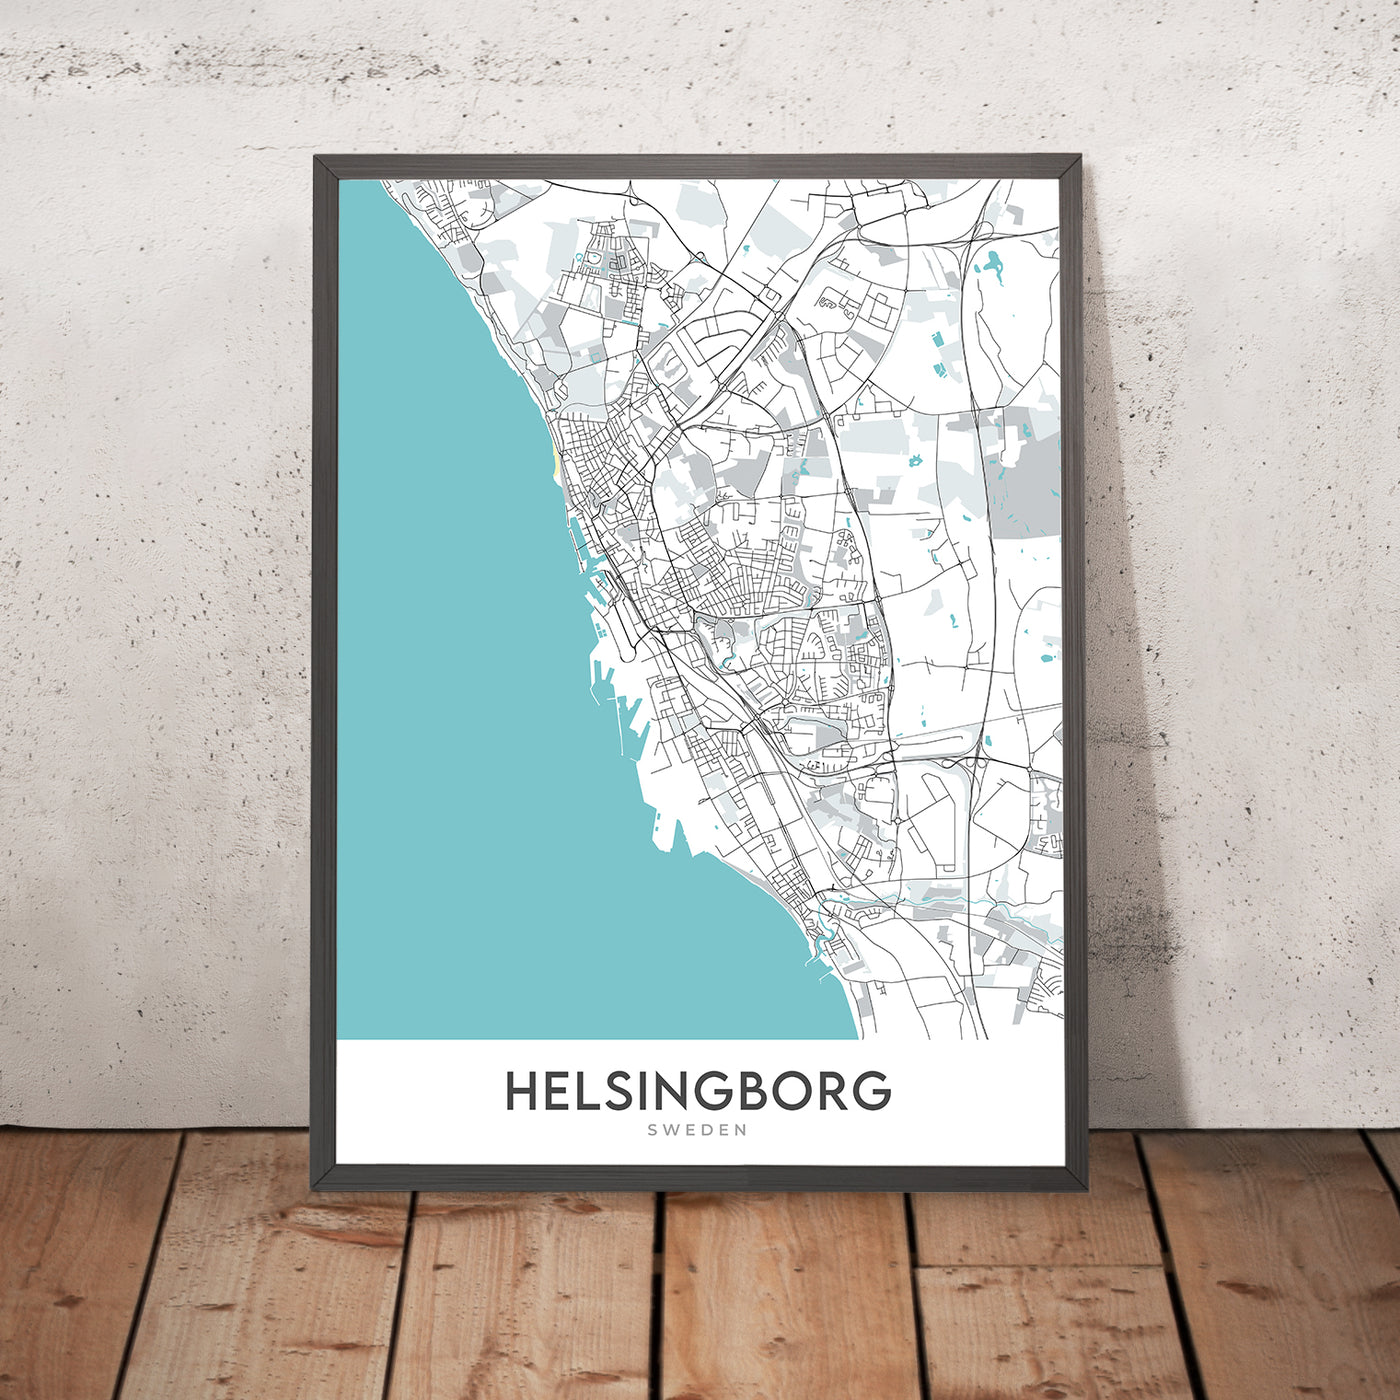 Moderner Stadtplan von Helsingborg, Schweden: Centrum, Ramlösa, Schloss Helsingborg, Schloss Sofiero, E4